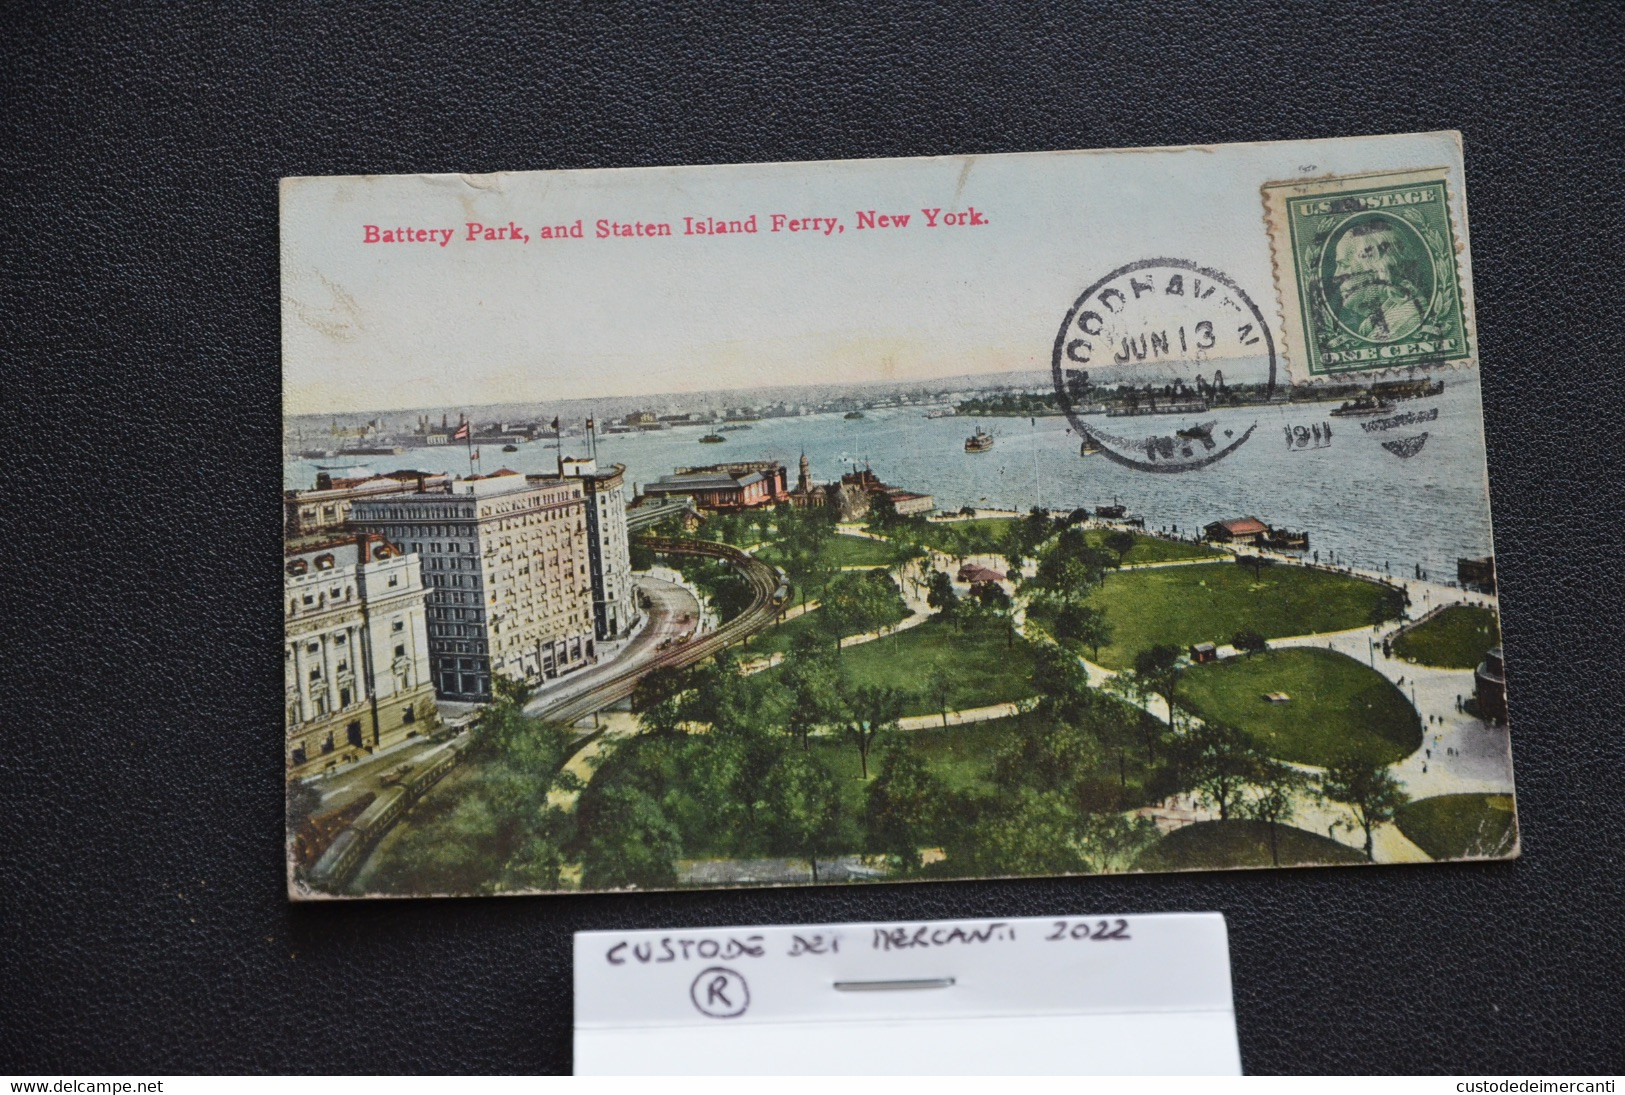 CARTOLINA POSTALE CARD POSTAL BATTERY PARK STATEN ISLAND FERRY N.Y. CITY VG 1913 STAMP ONE CENTS G. WASHINGTON RARE - Brooklyn